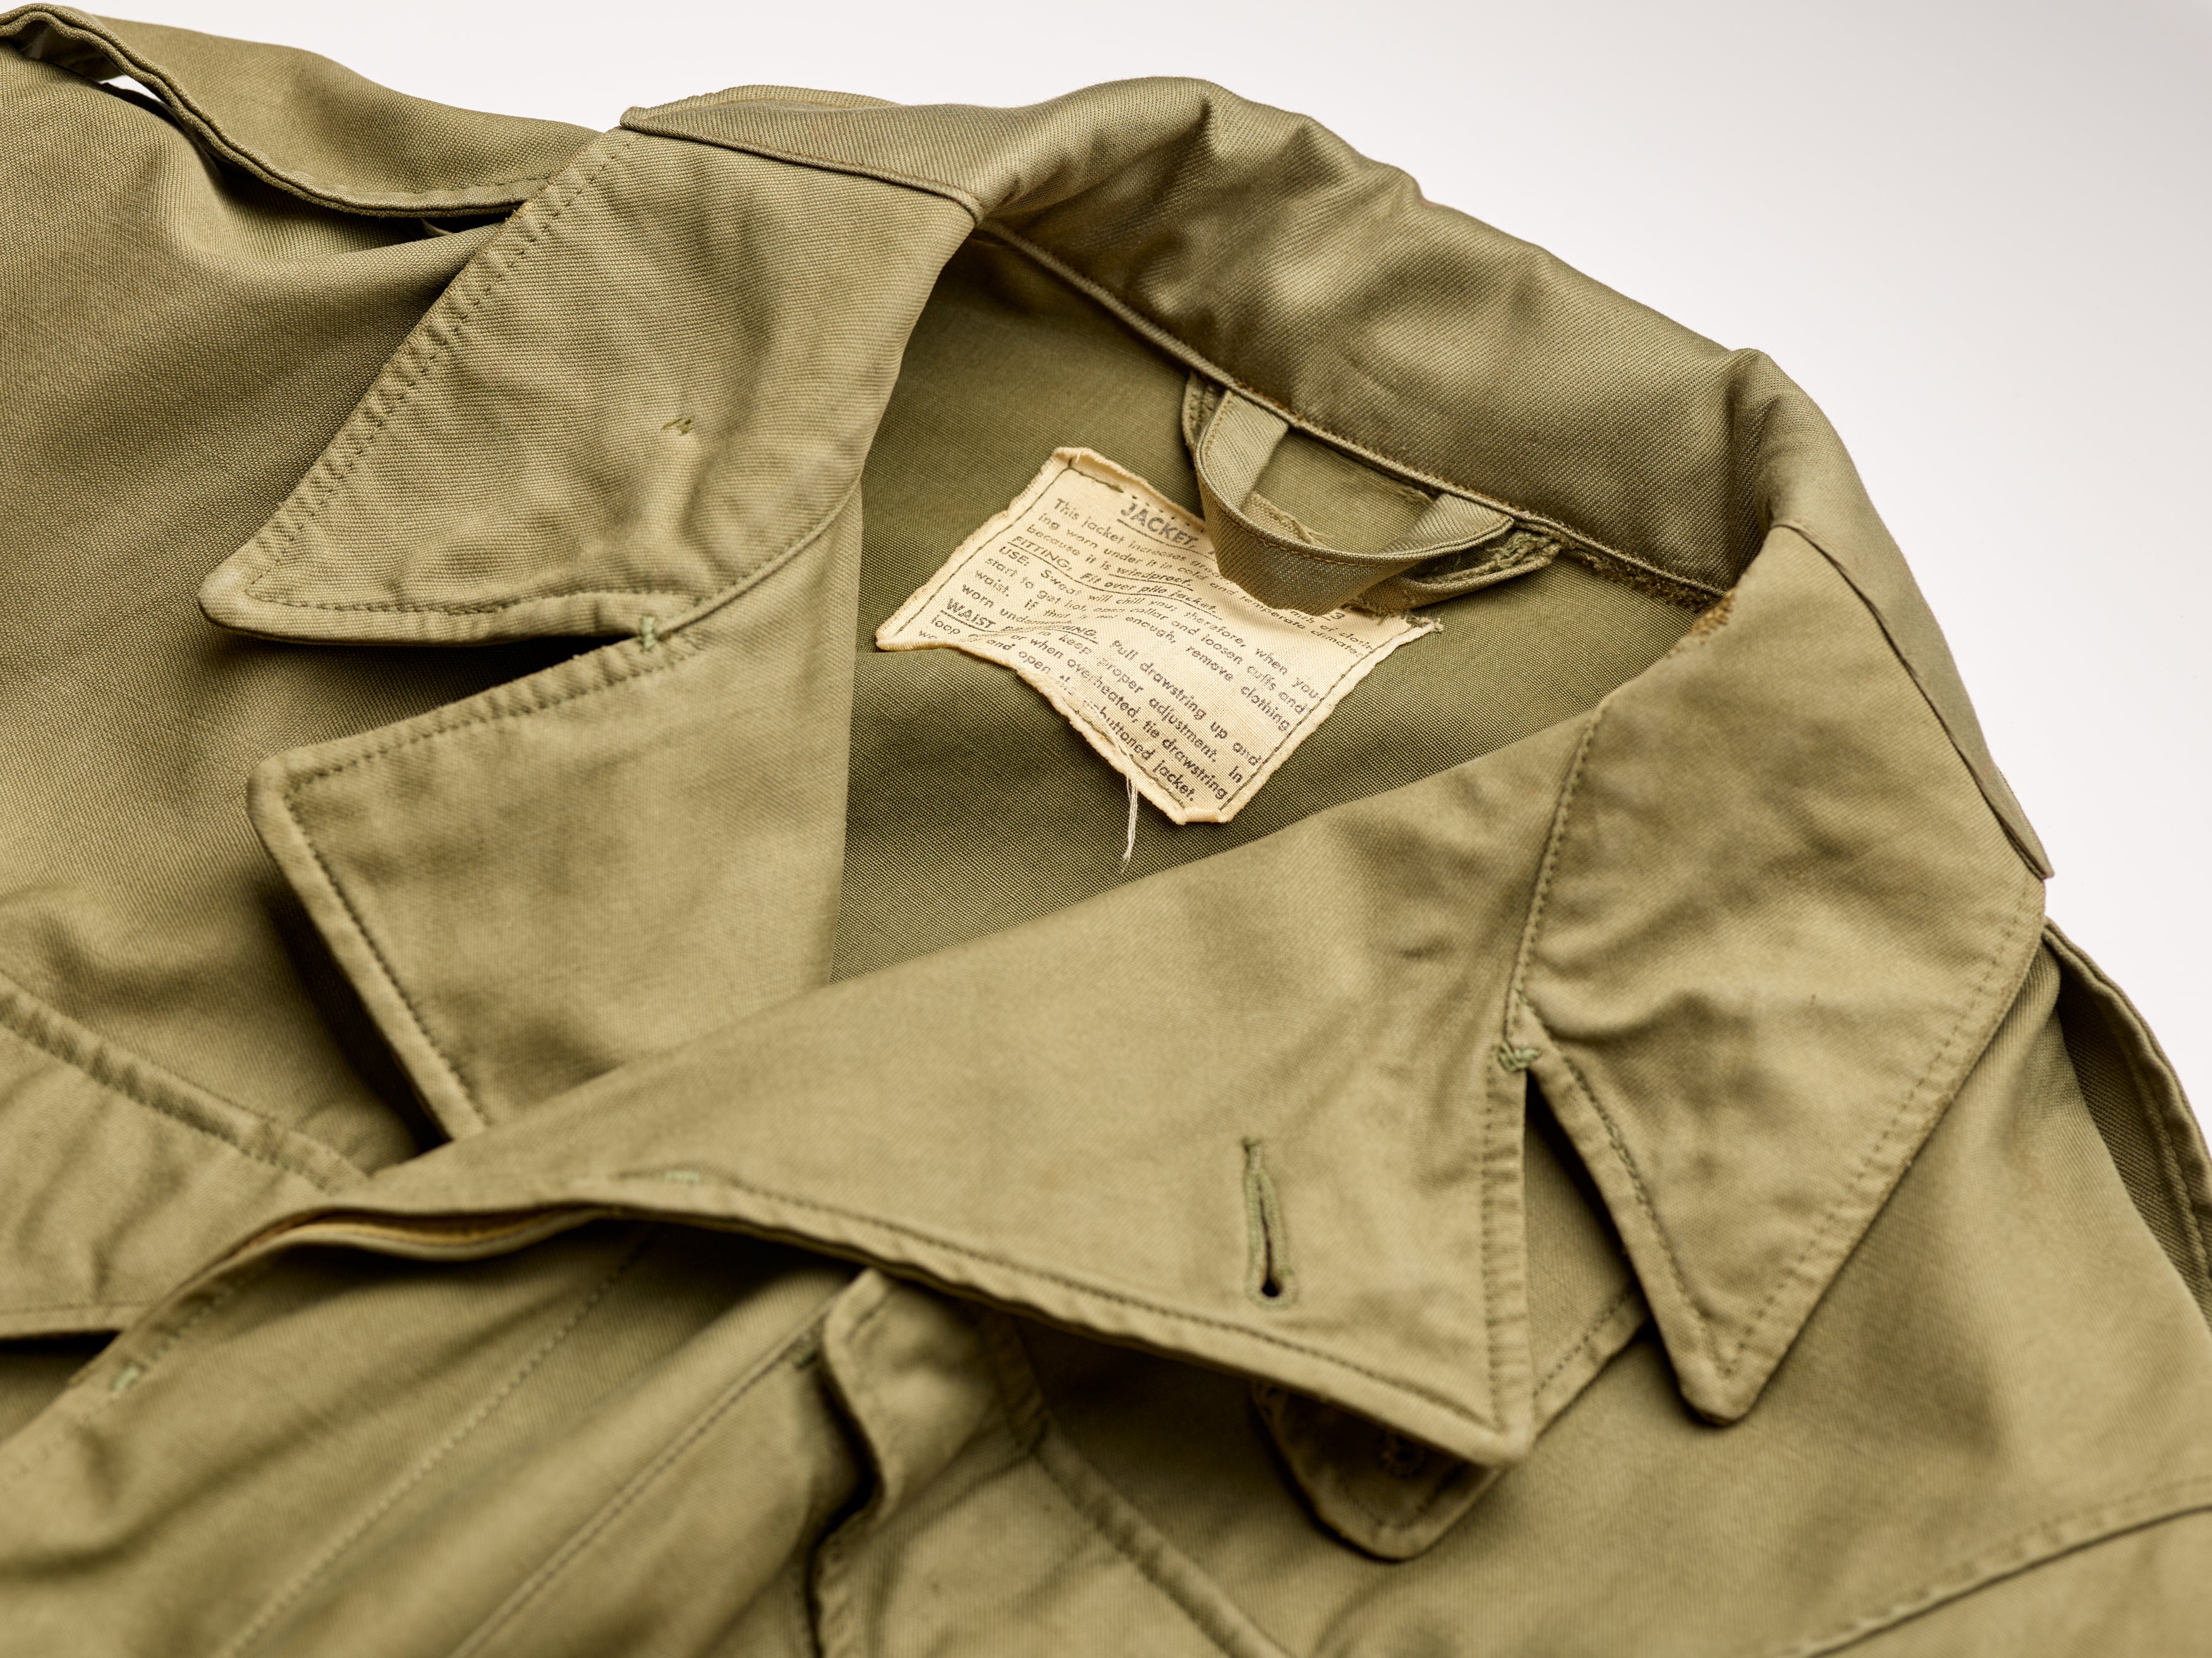 The M-1943 Field Jacket